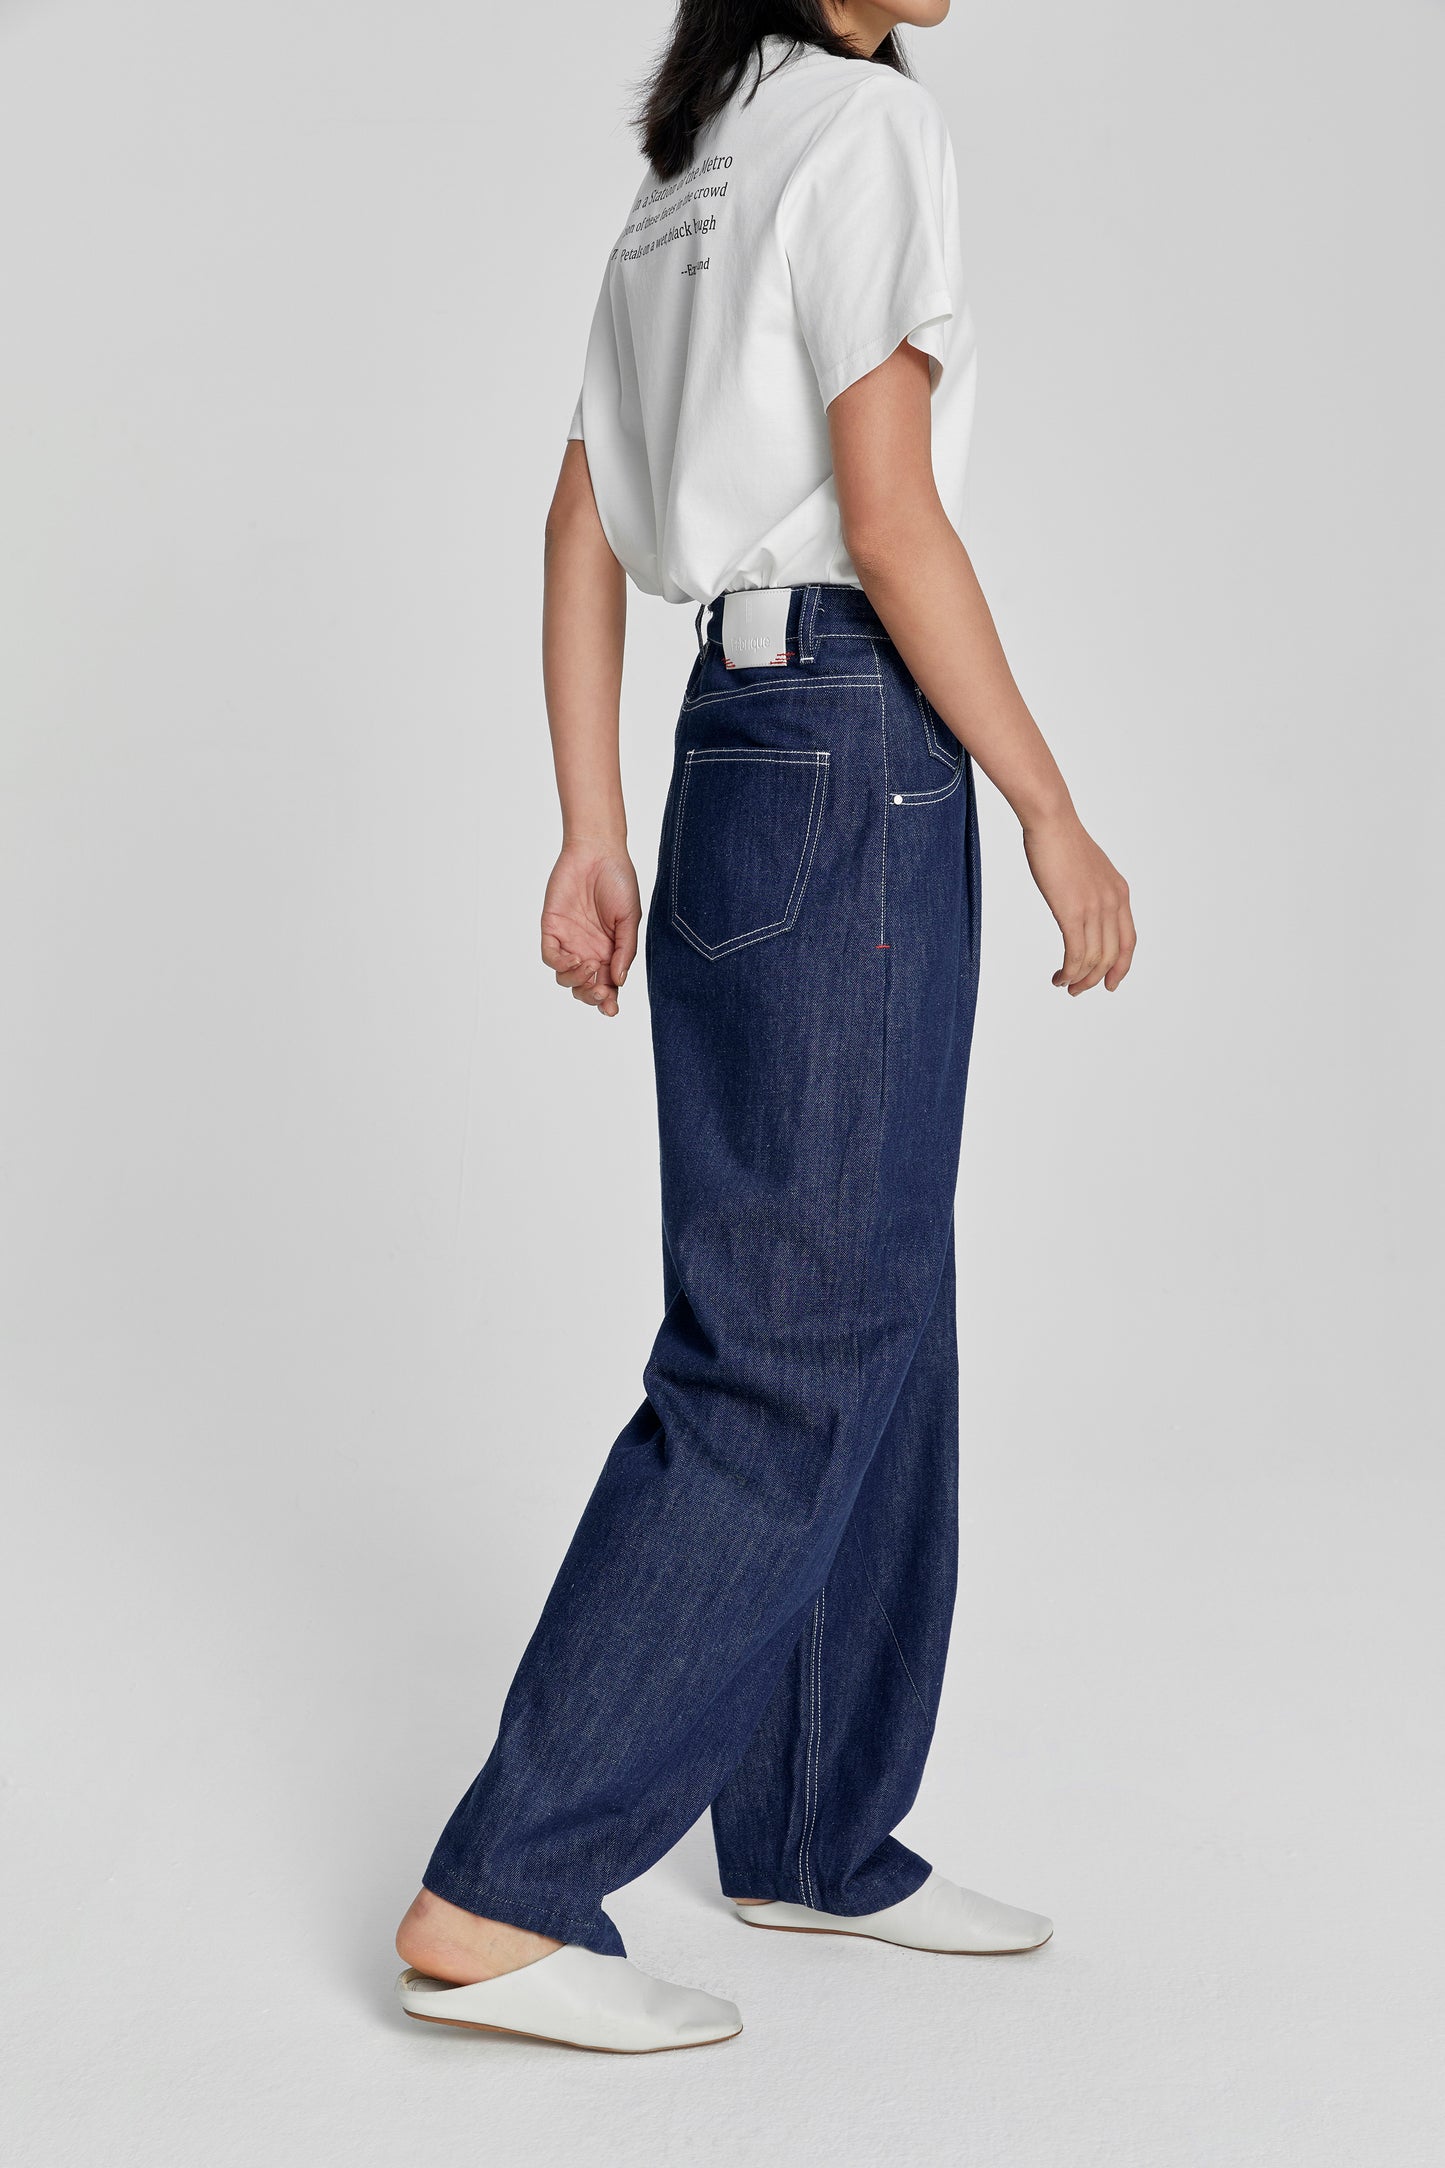 Classiq High-Waisted Denim Jeans in Cotton Blend